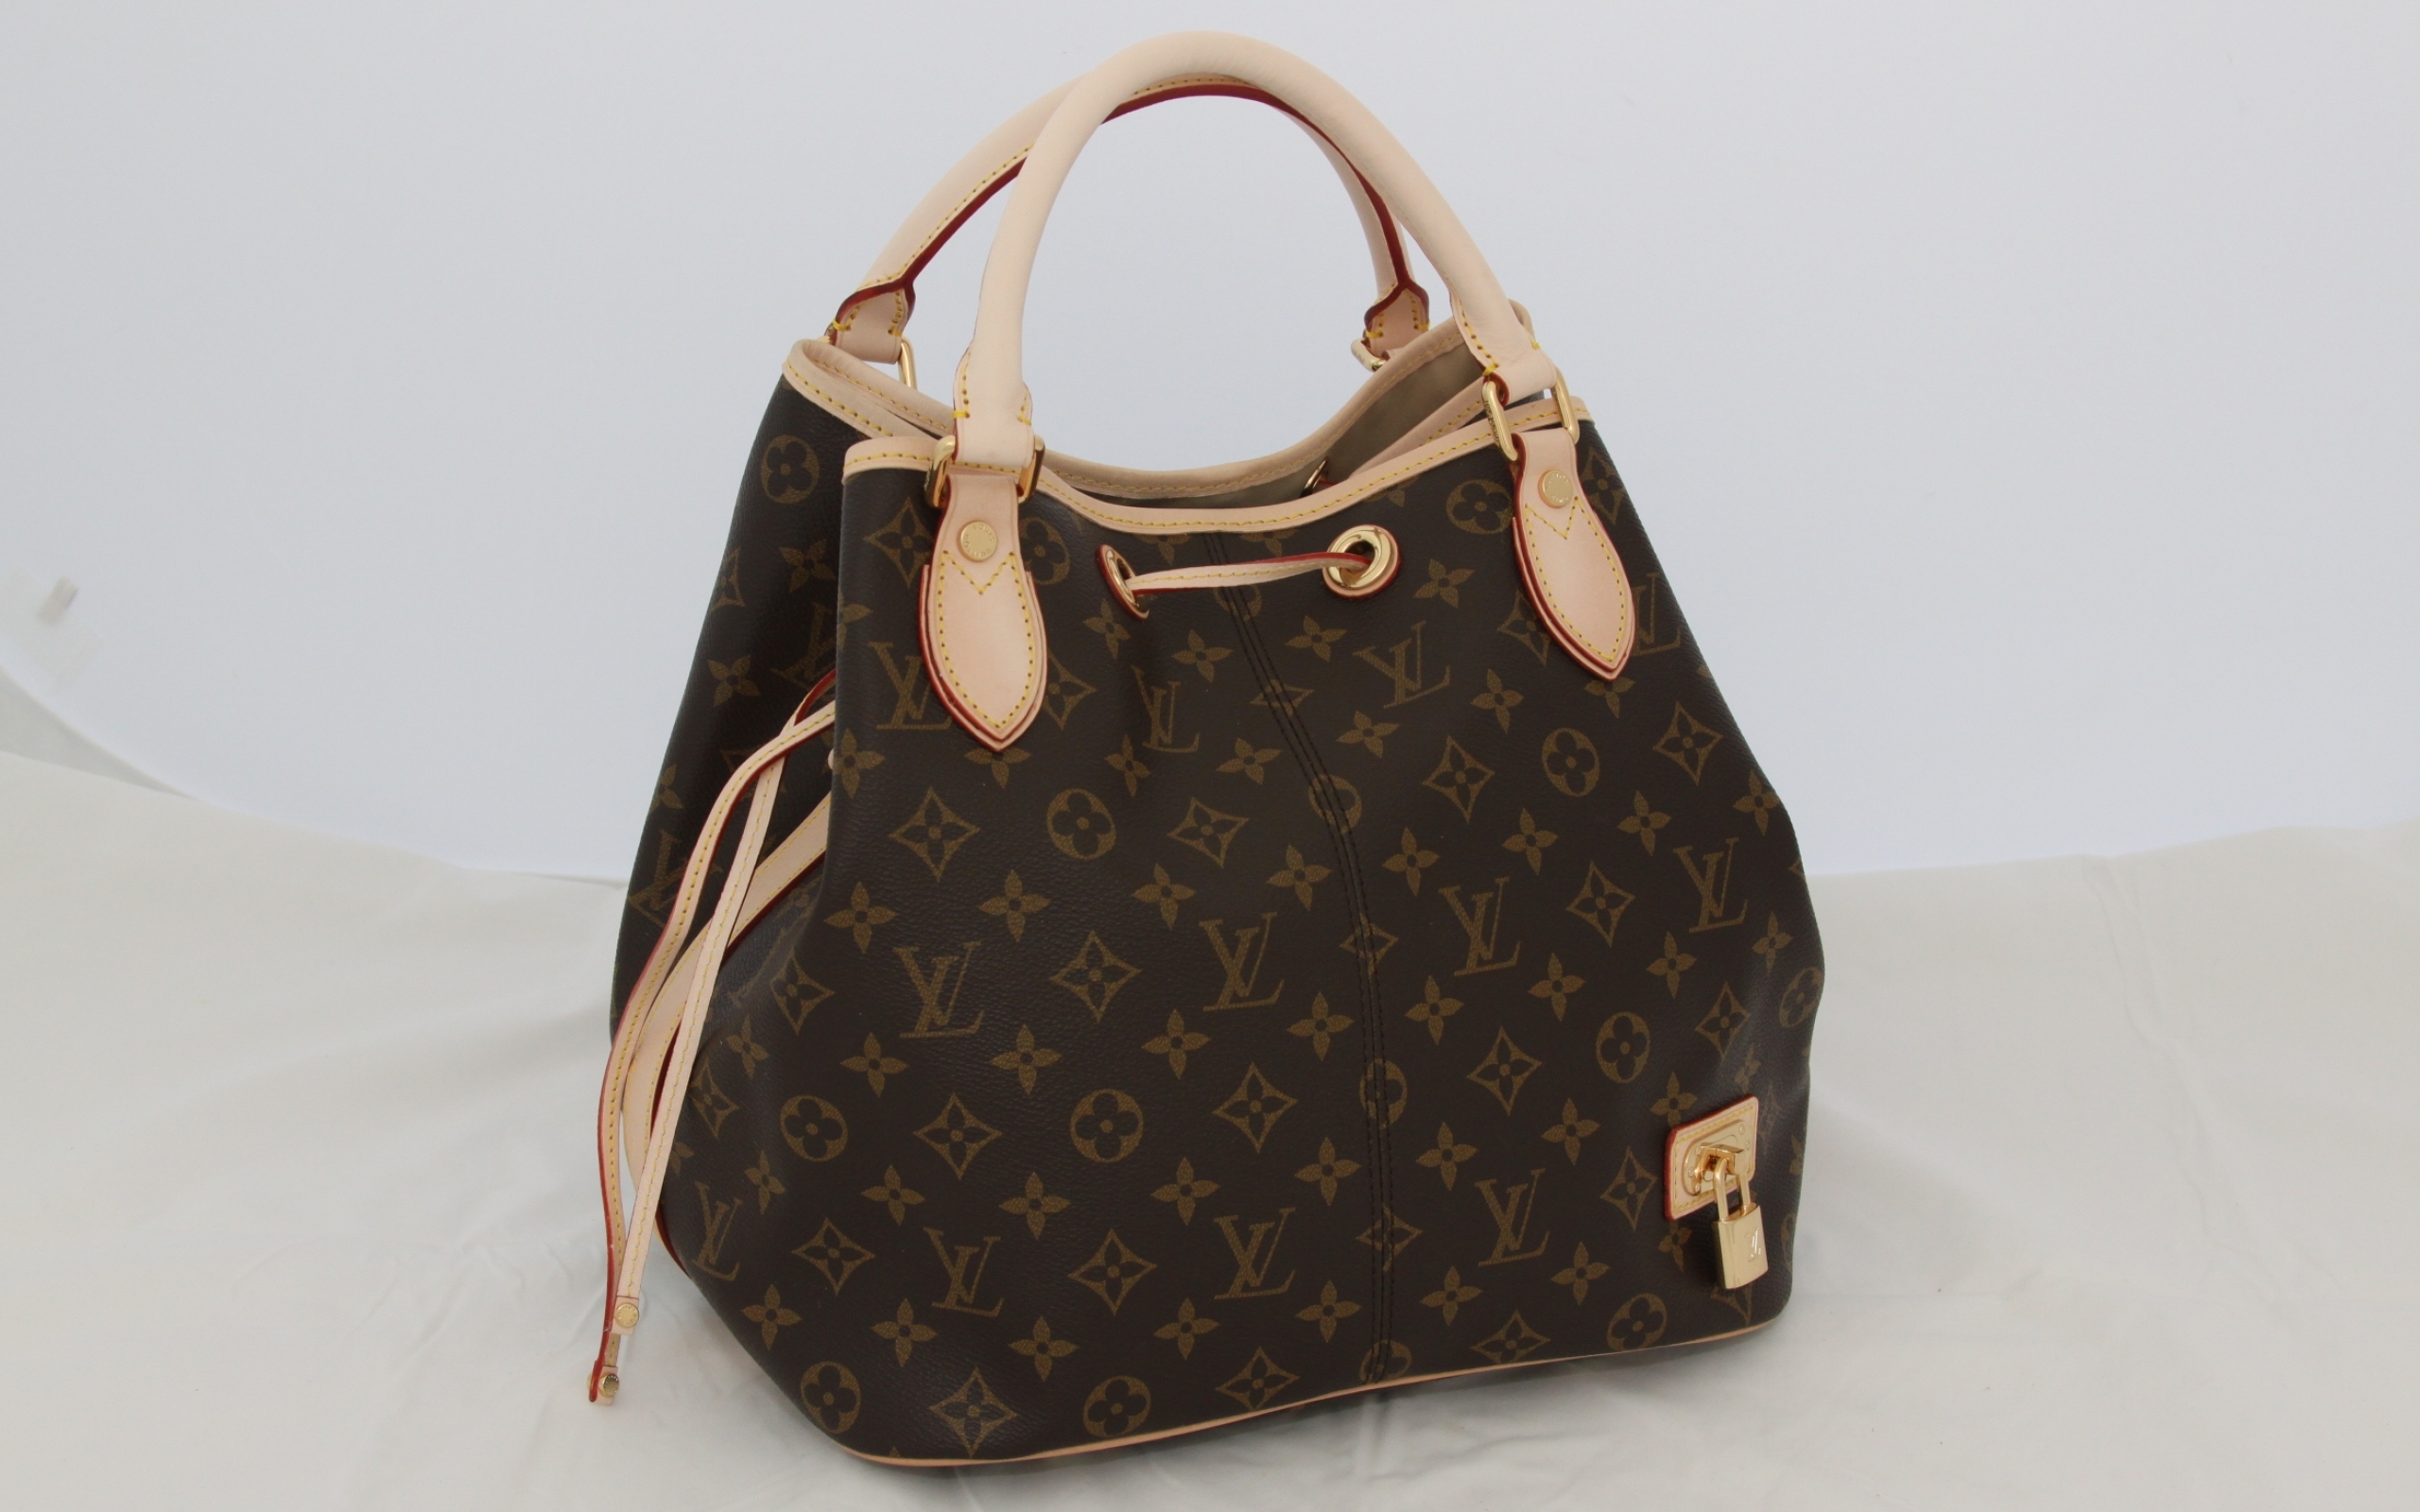 Lv. Louis Vuitton Handbag. Луи Виттон дизайнер сумки. Луи Вюиттон (дизайнер). Louis Vuitton дизайнер.